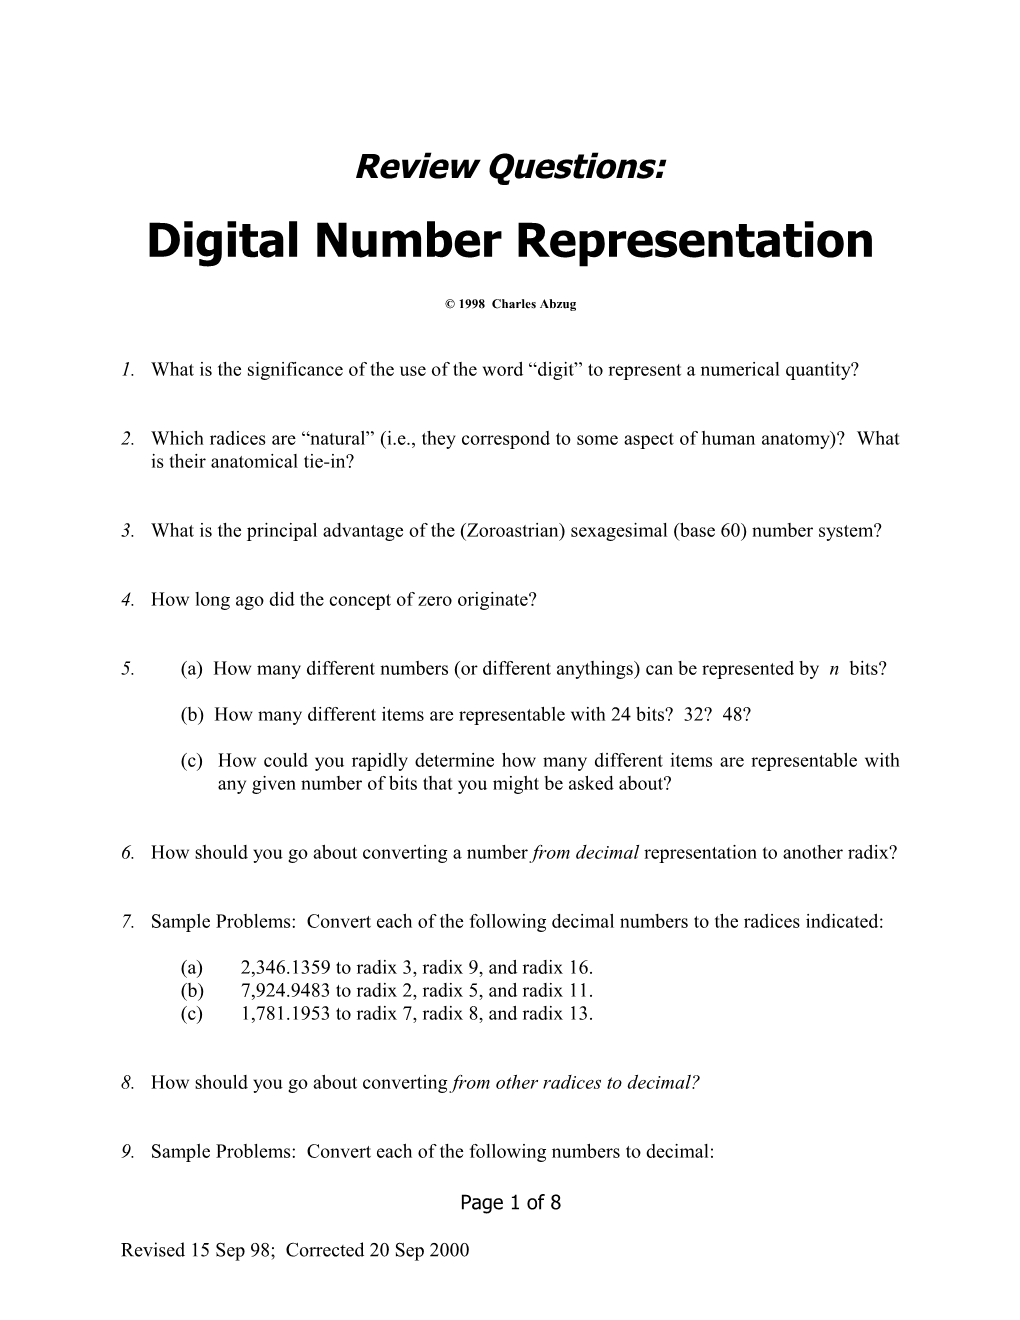 Review Questions: Digital Number Representation